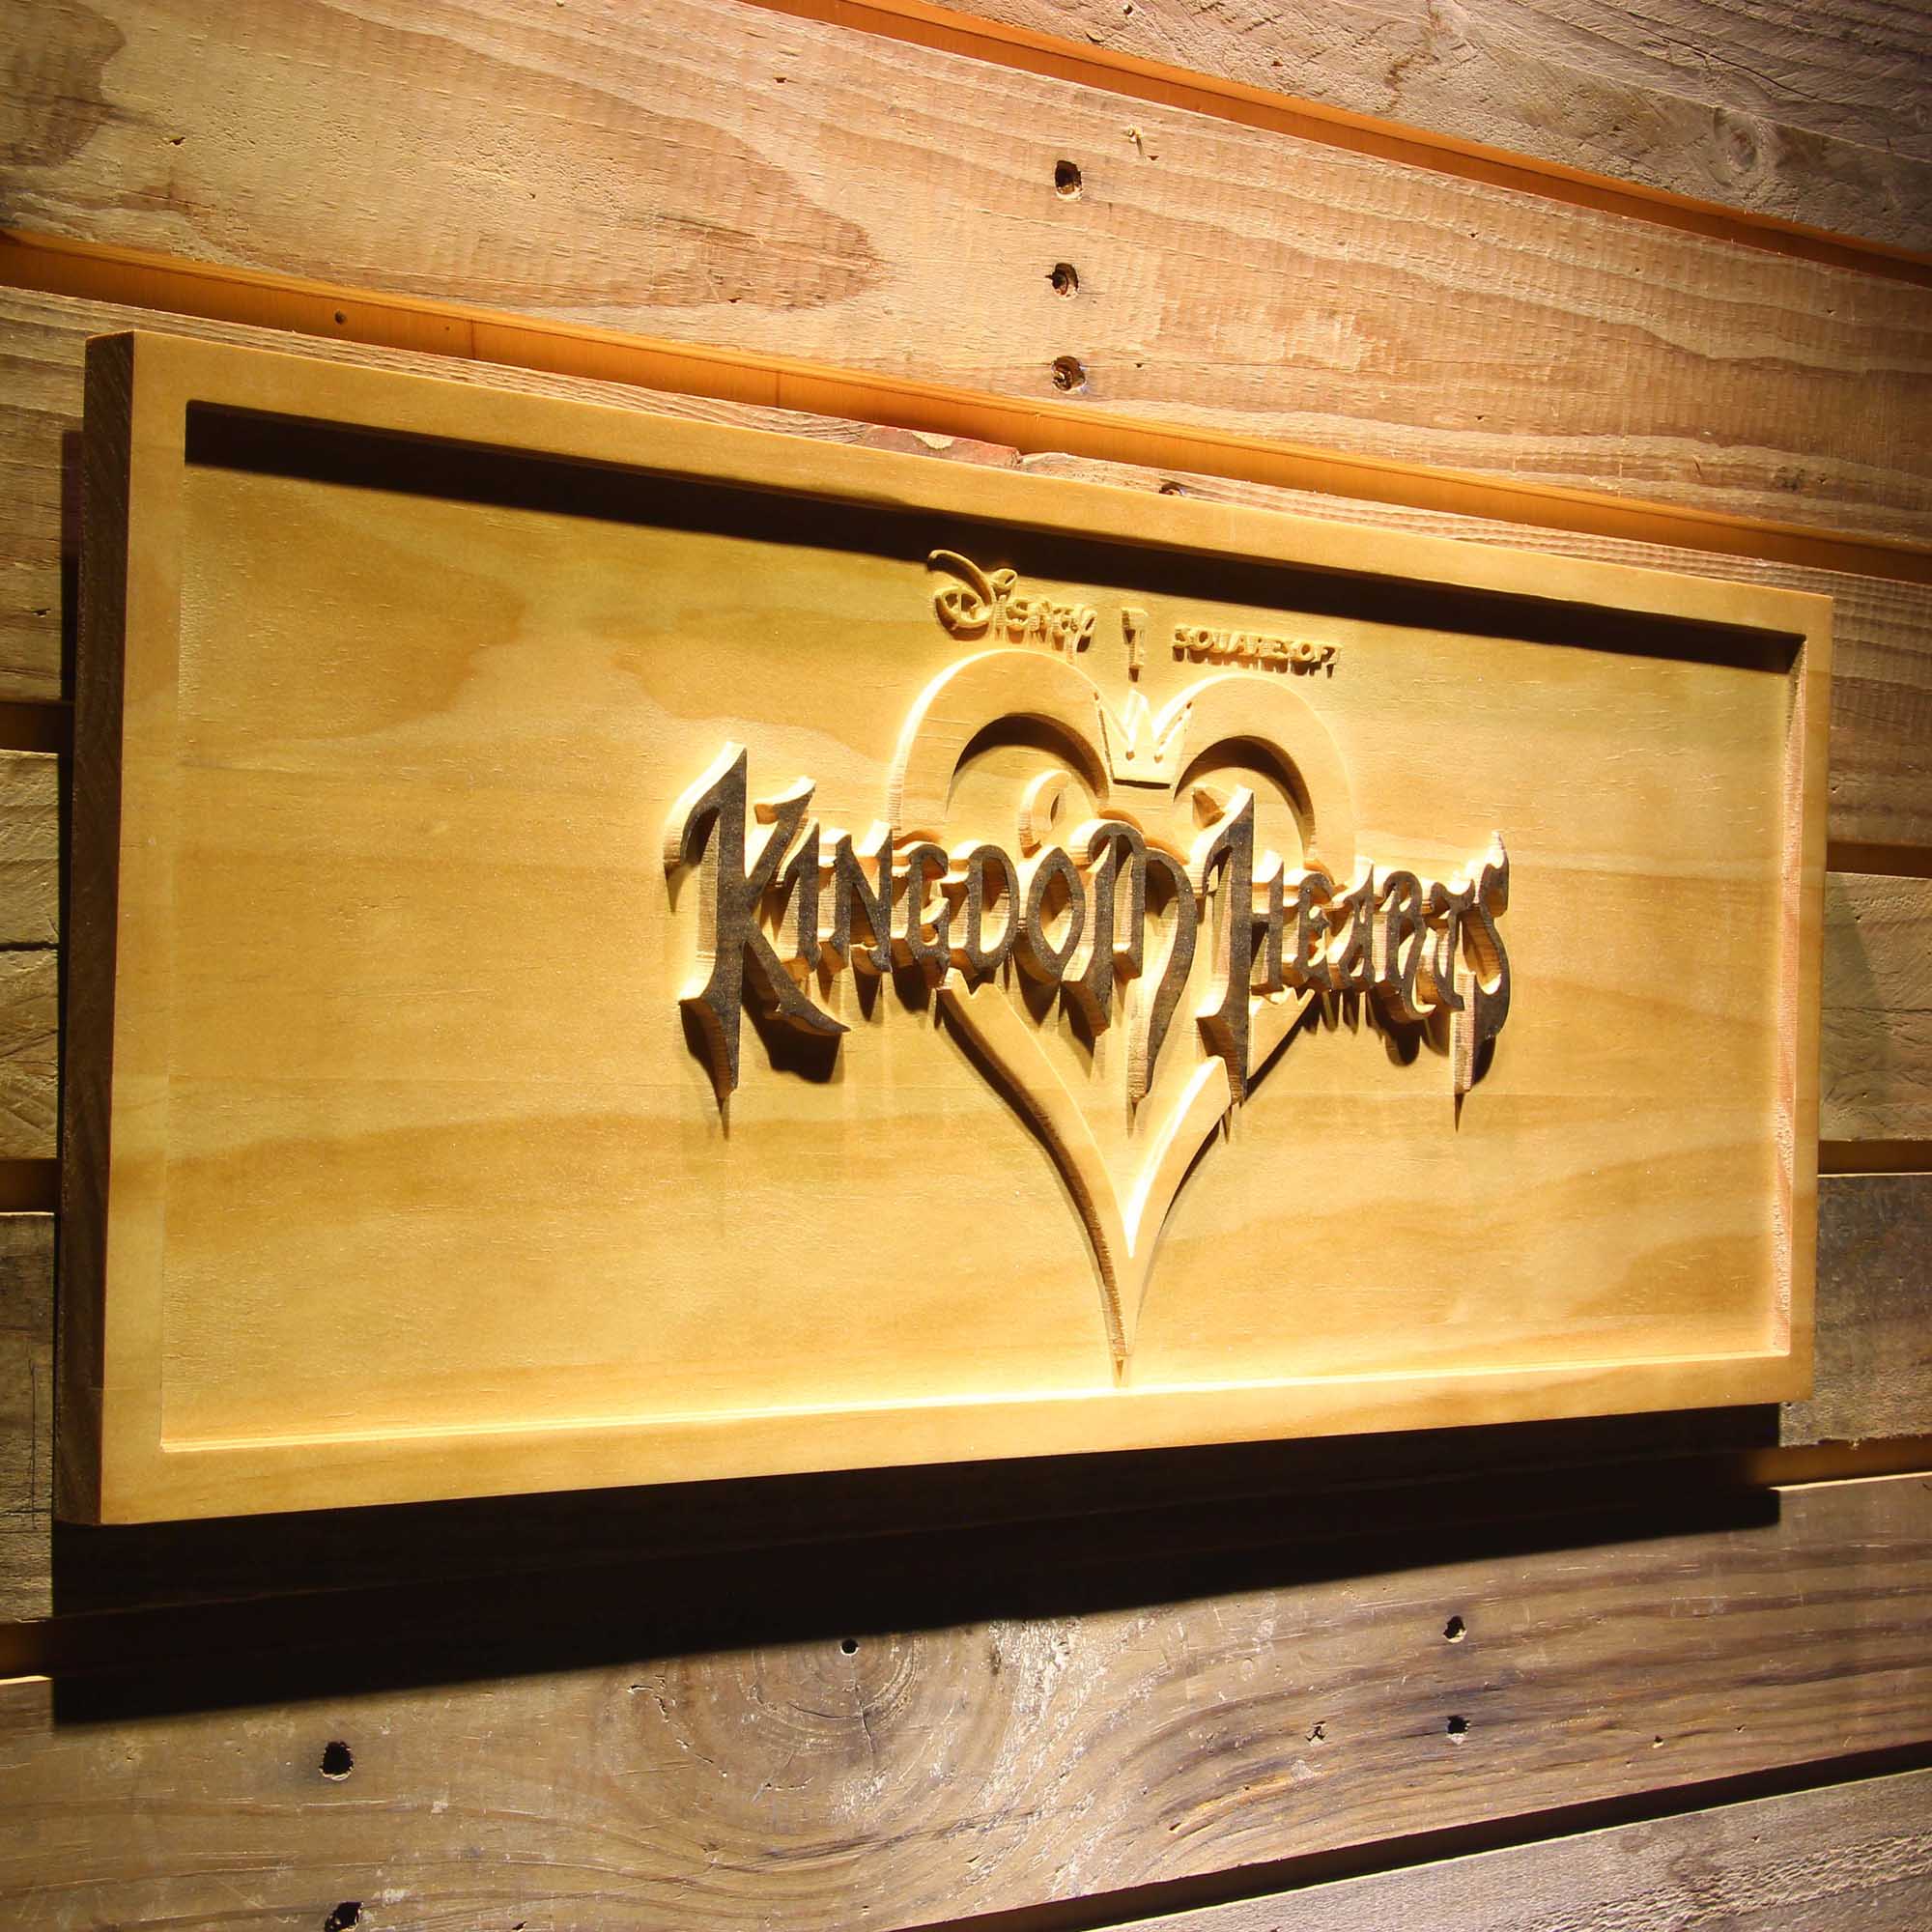 Kingdom Hearts Sora 3D Wooden Engrave Sign